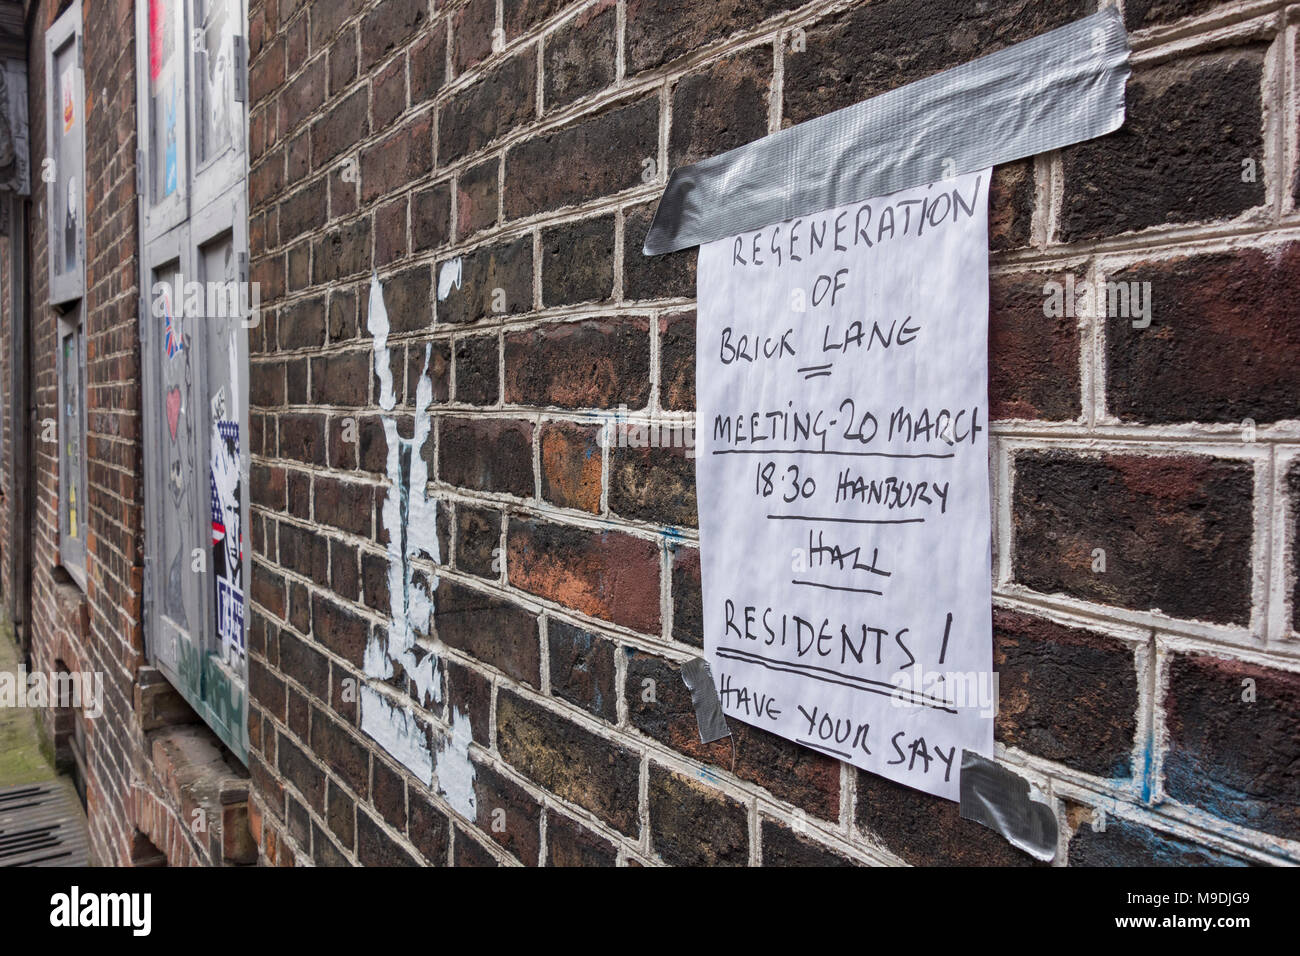 Regeneration of Brick Lane residents meeting poster in Spitalfields in London's East End, England, UK Stock Photo